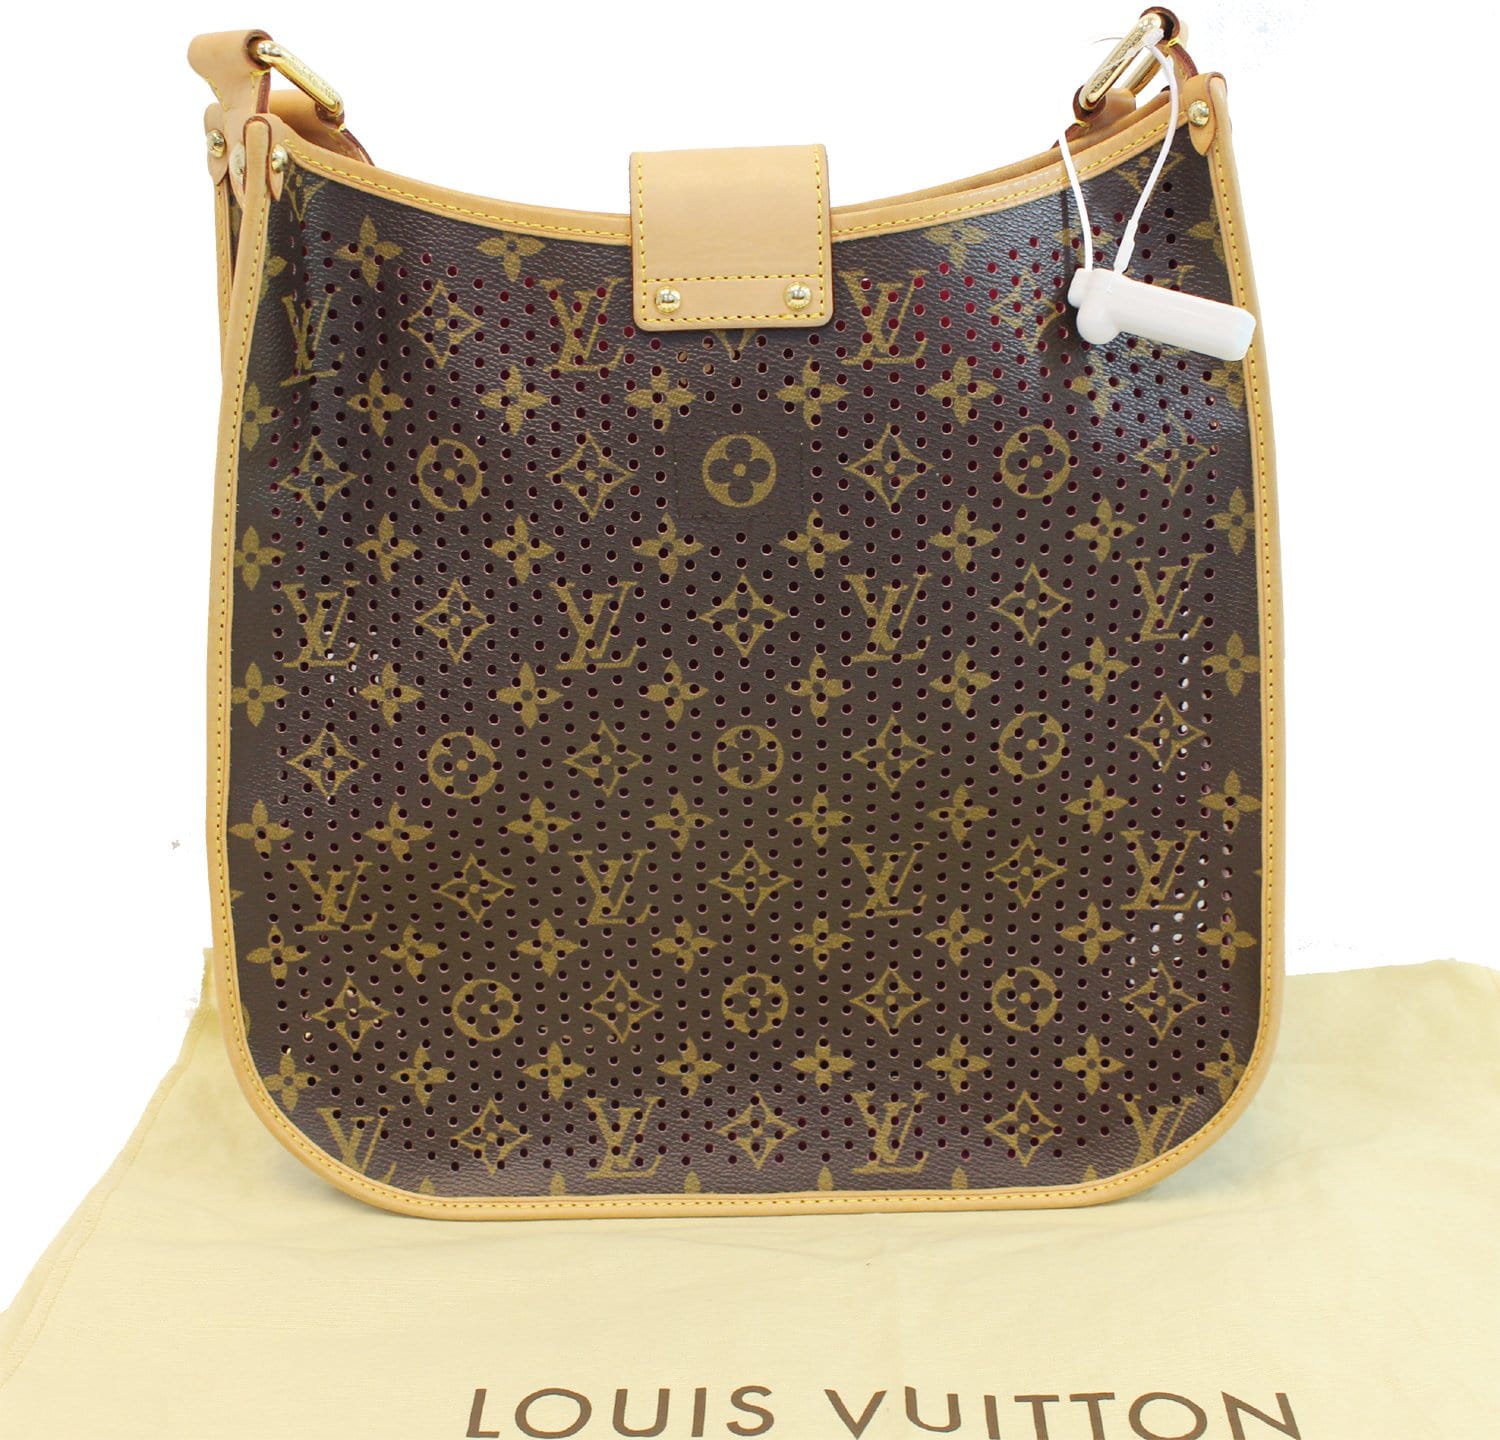 LOUIS VUITTON Monogram Perforated Pochette Accessories Bag Fuchsia 115650